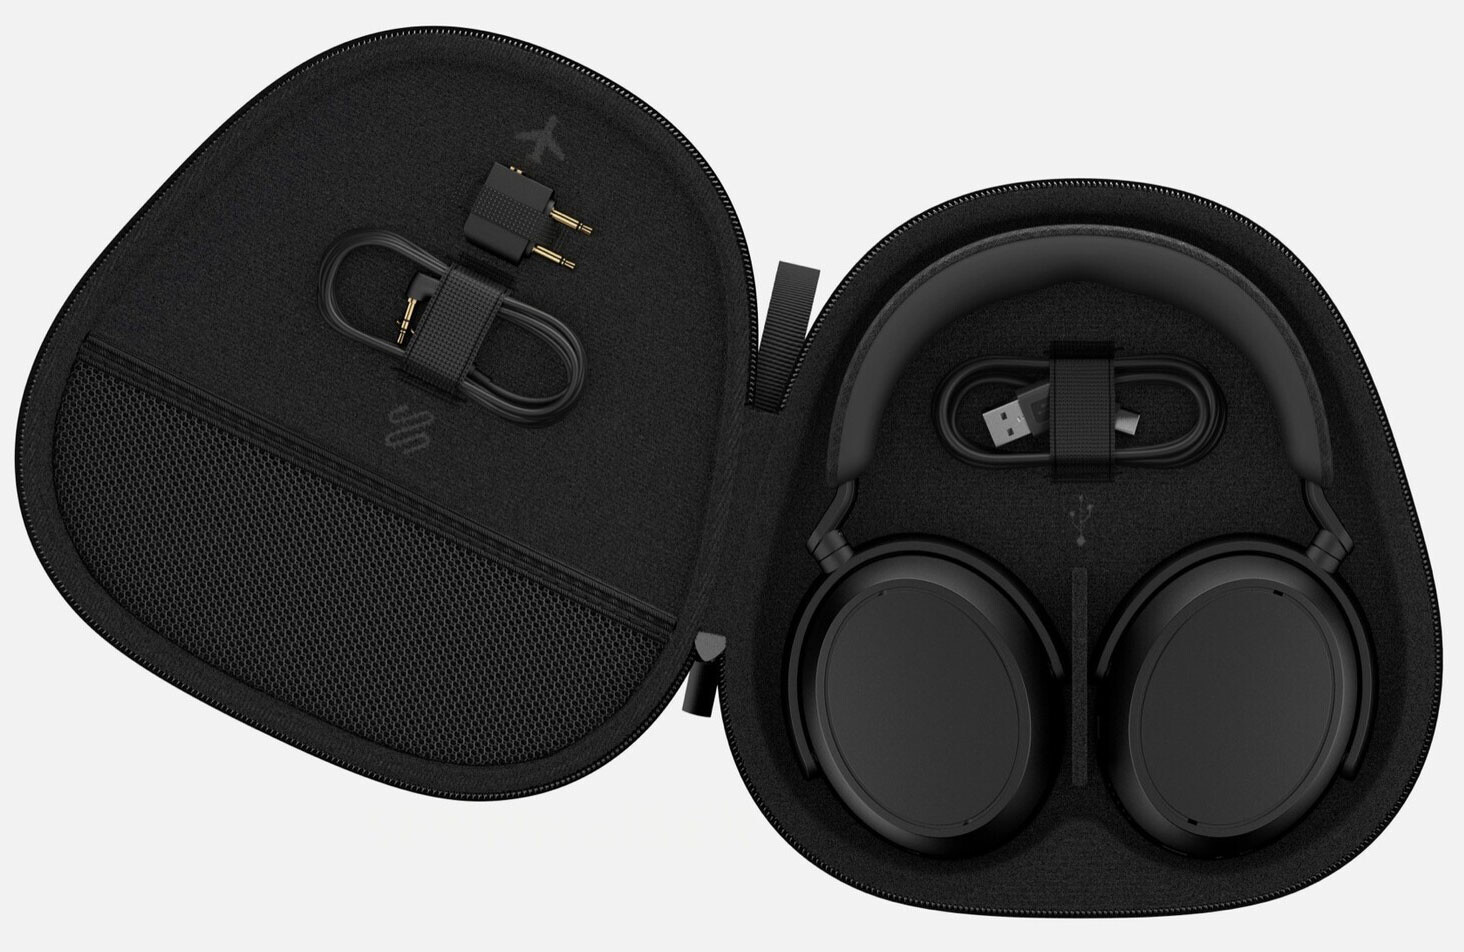 Sennheiser: Introducing the New Momentum 4 Wireless Headphones